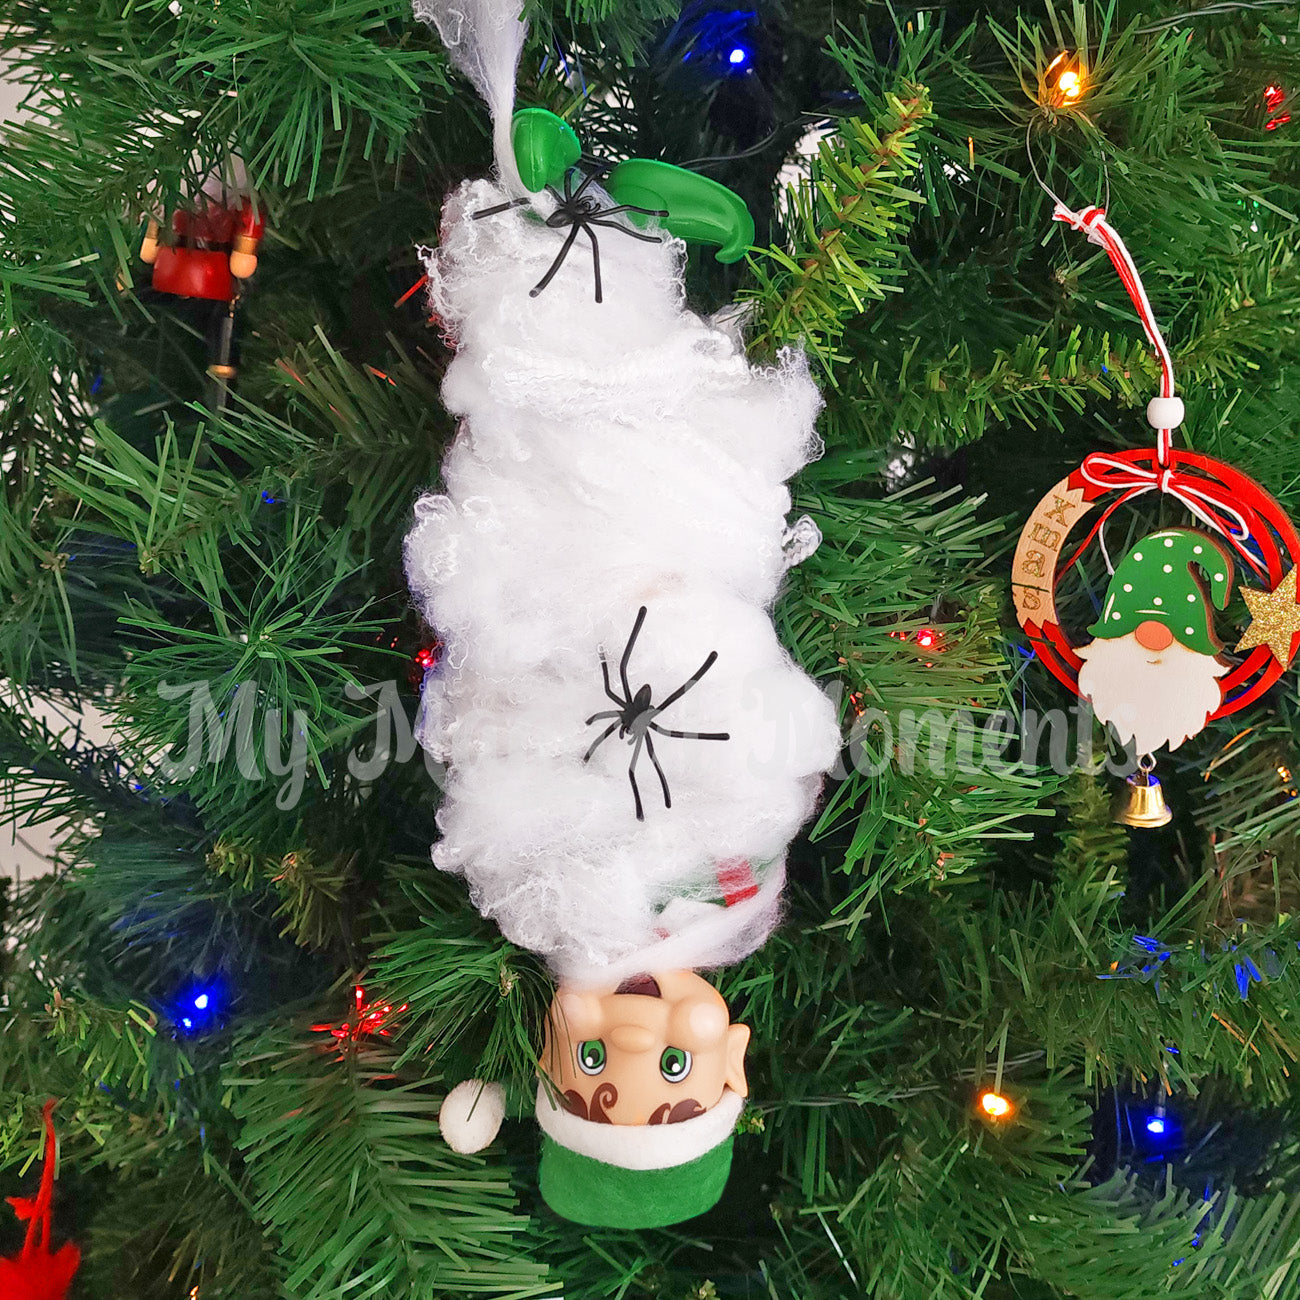 Elf stuck upside down caught in a spider web prop